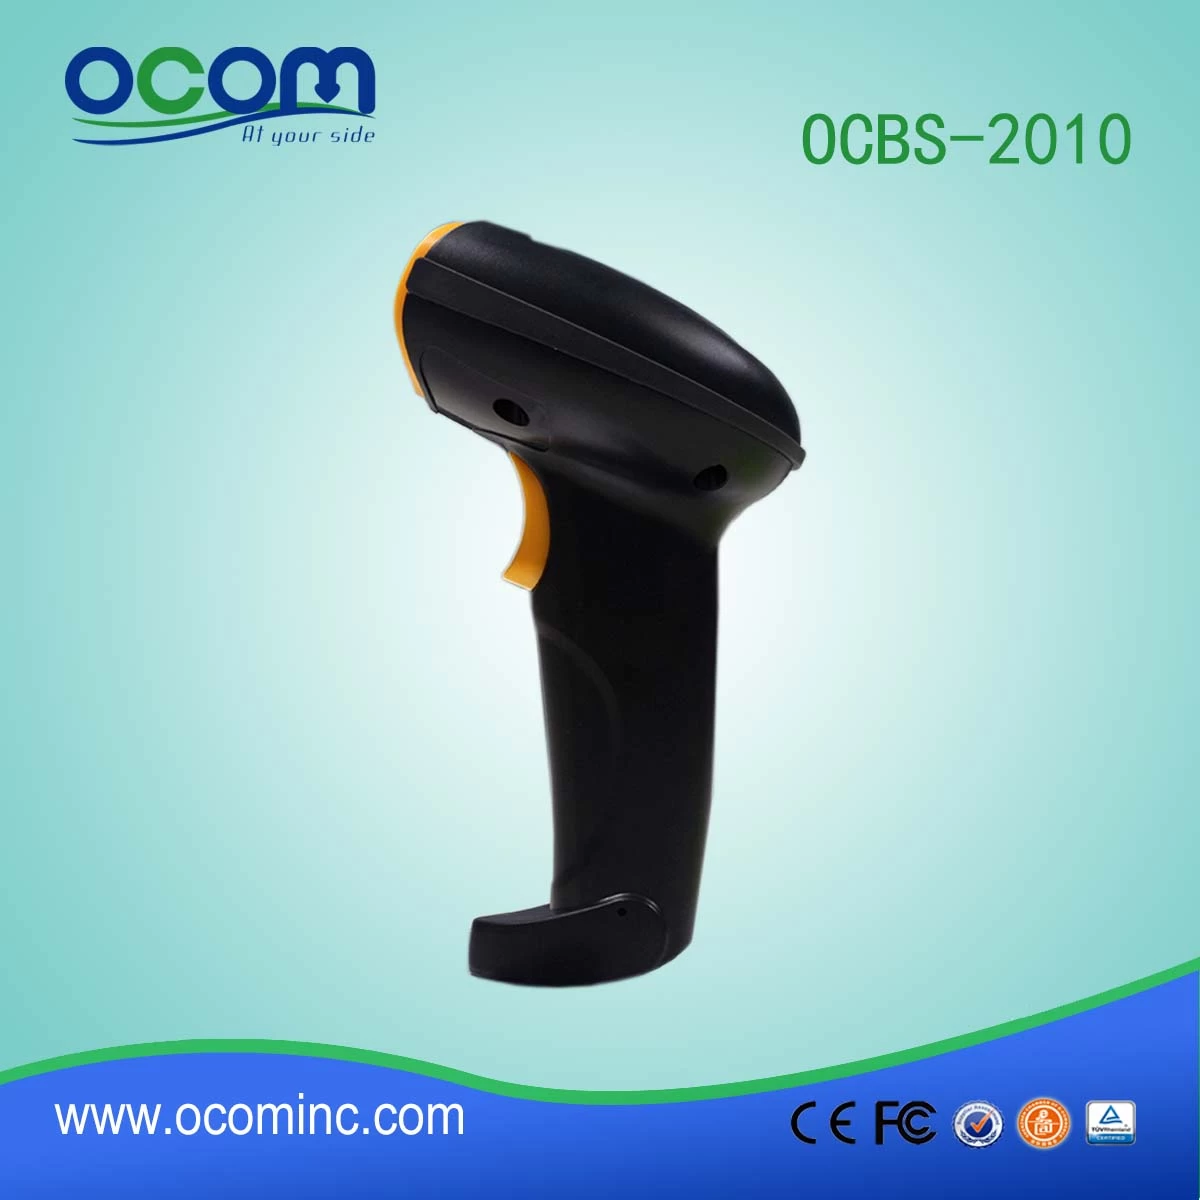 OCBS-2010: Cheapest 2D Barcode Scanner For QR Code